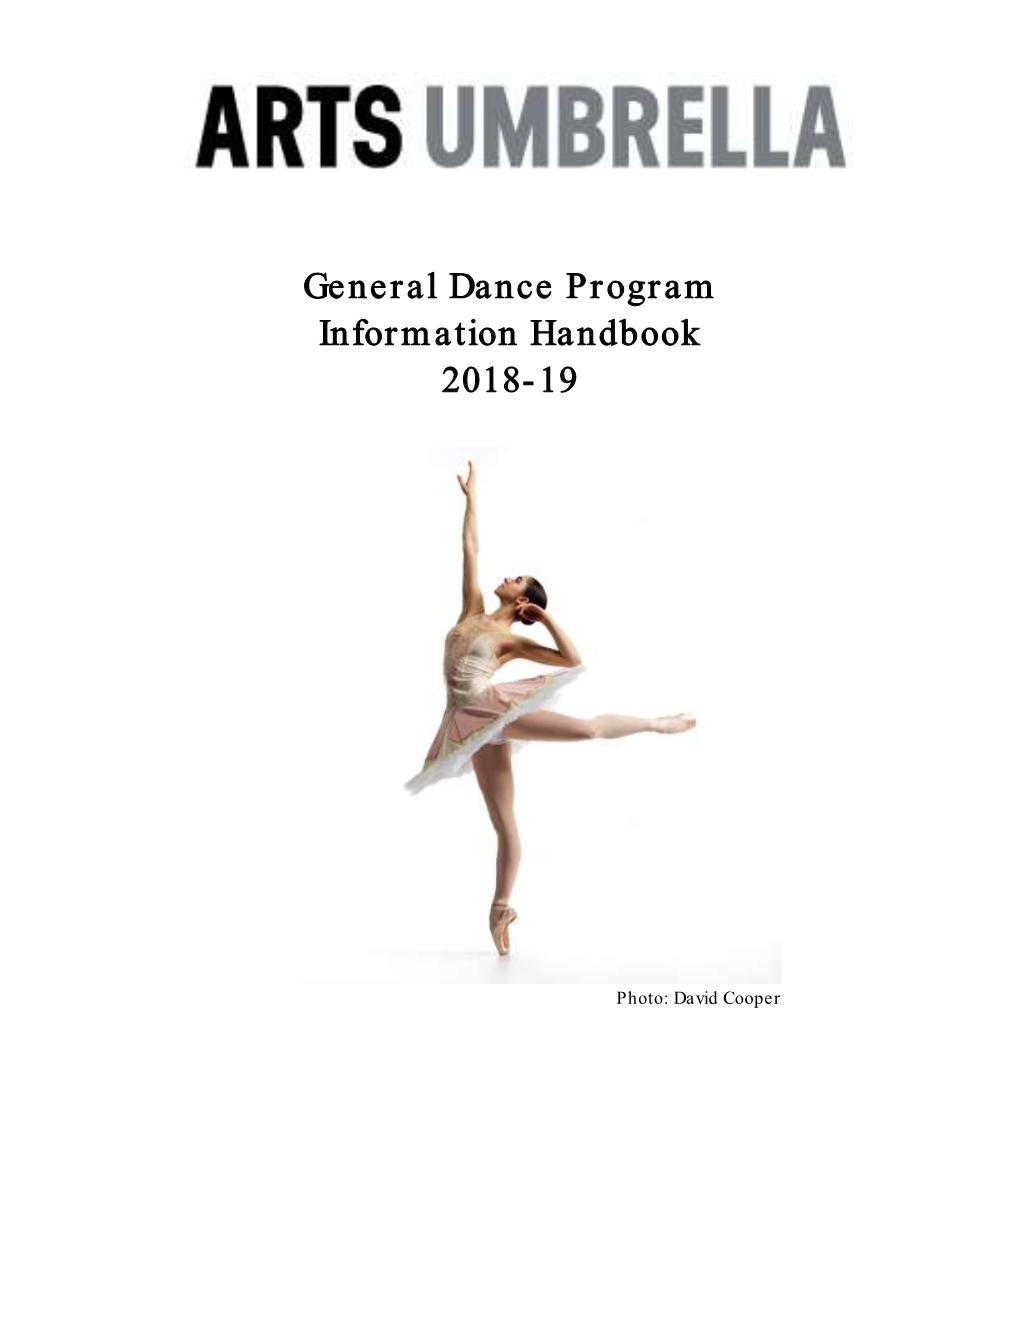 General Dance Program Information Handbook 2018-19